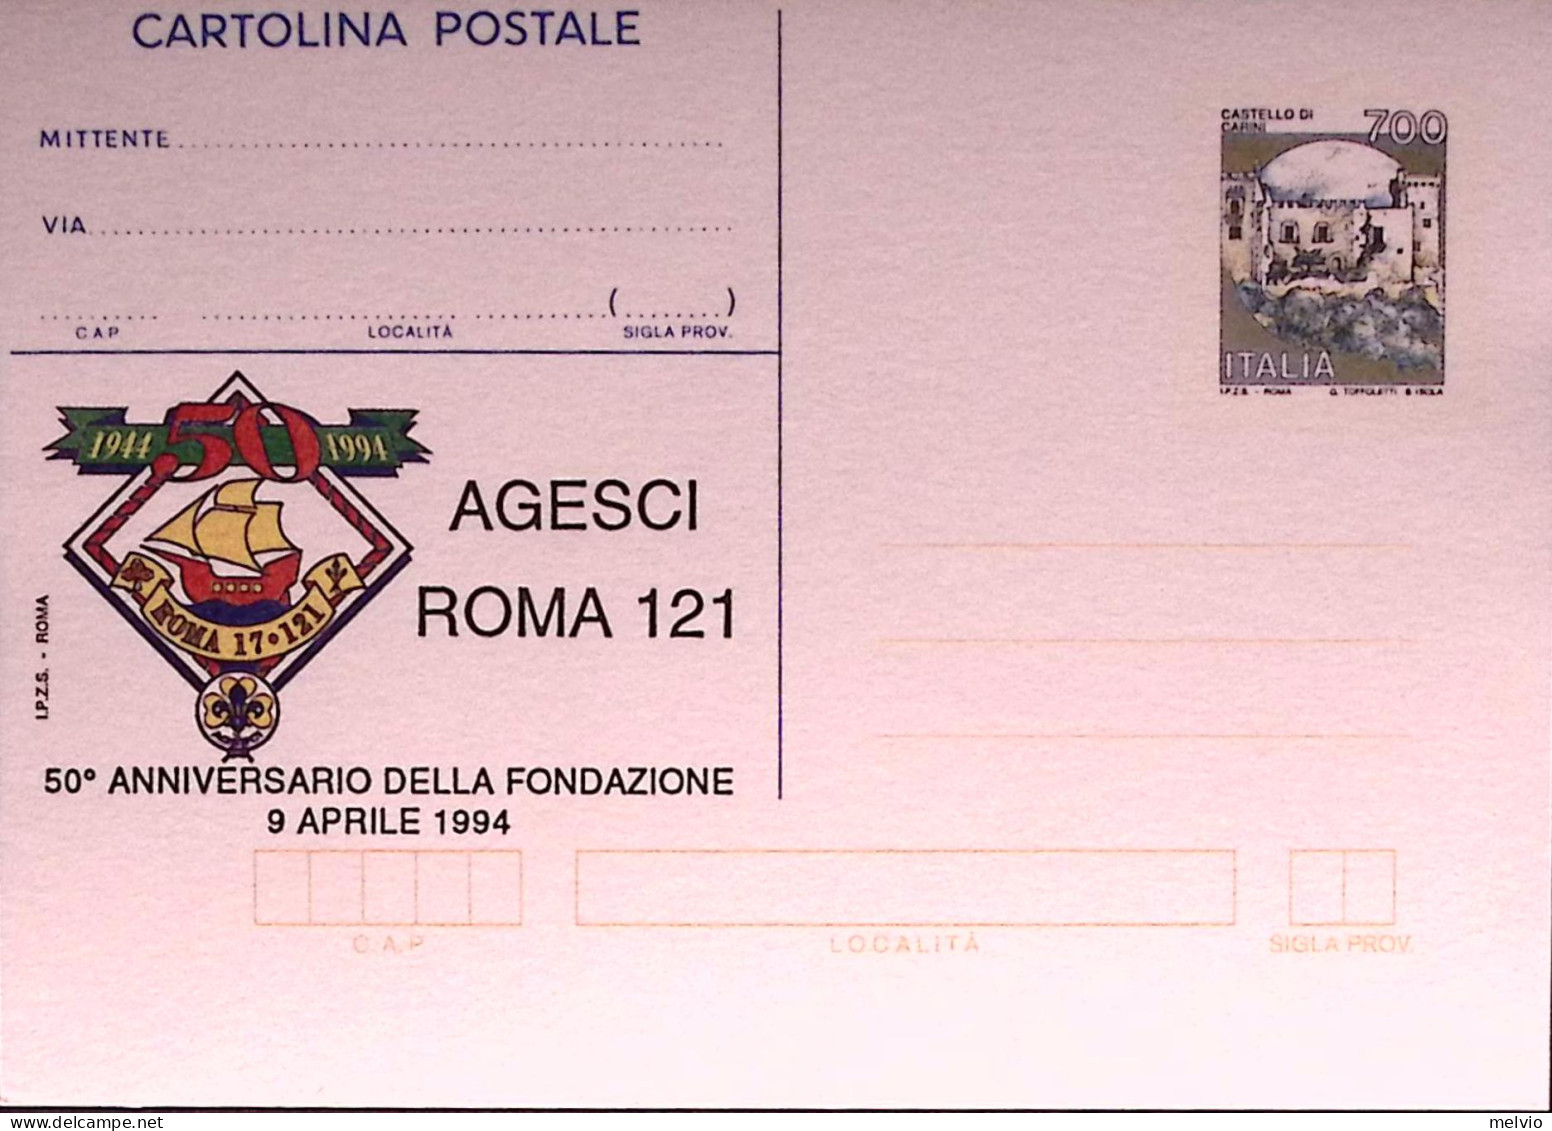 1994-AGESCI ROMA 121 Cartolina Postale IPZS Lire 700 Nuova - Entero Postal